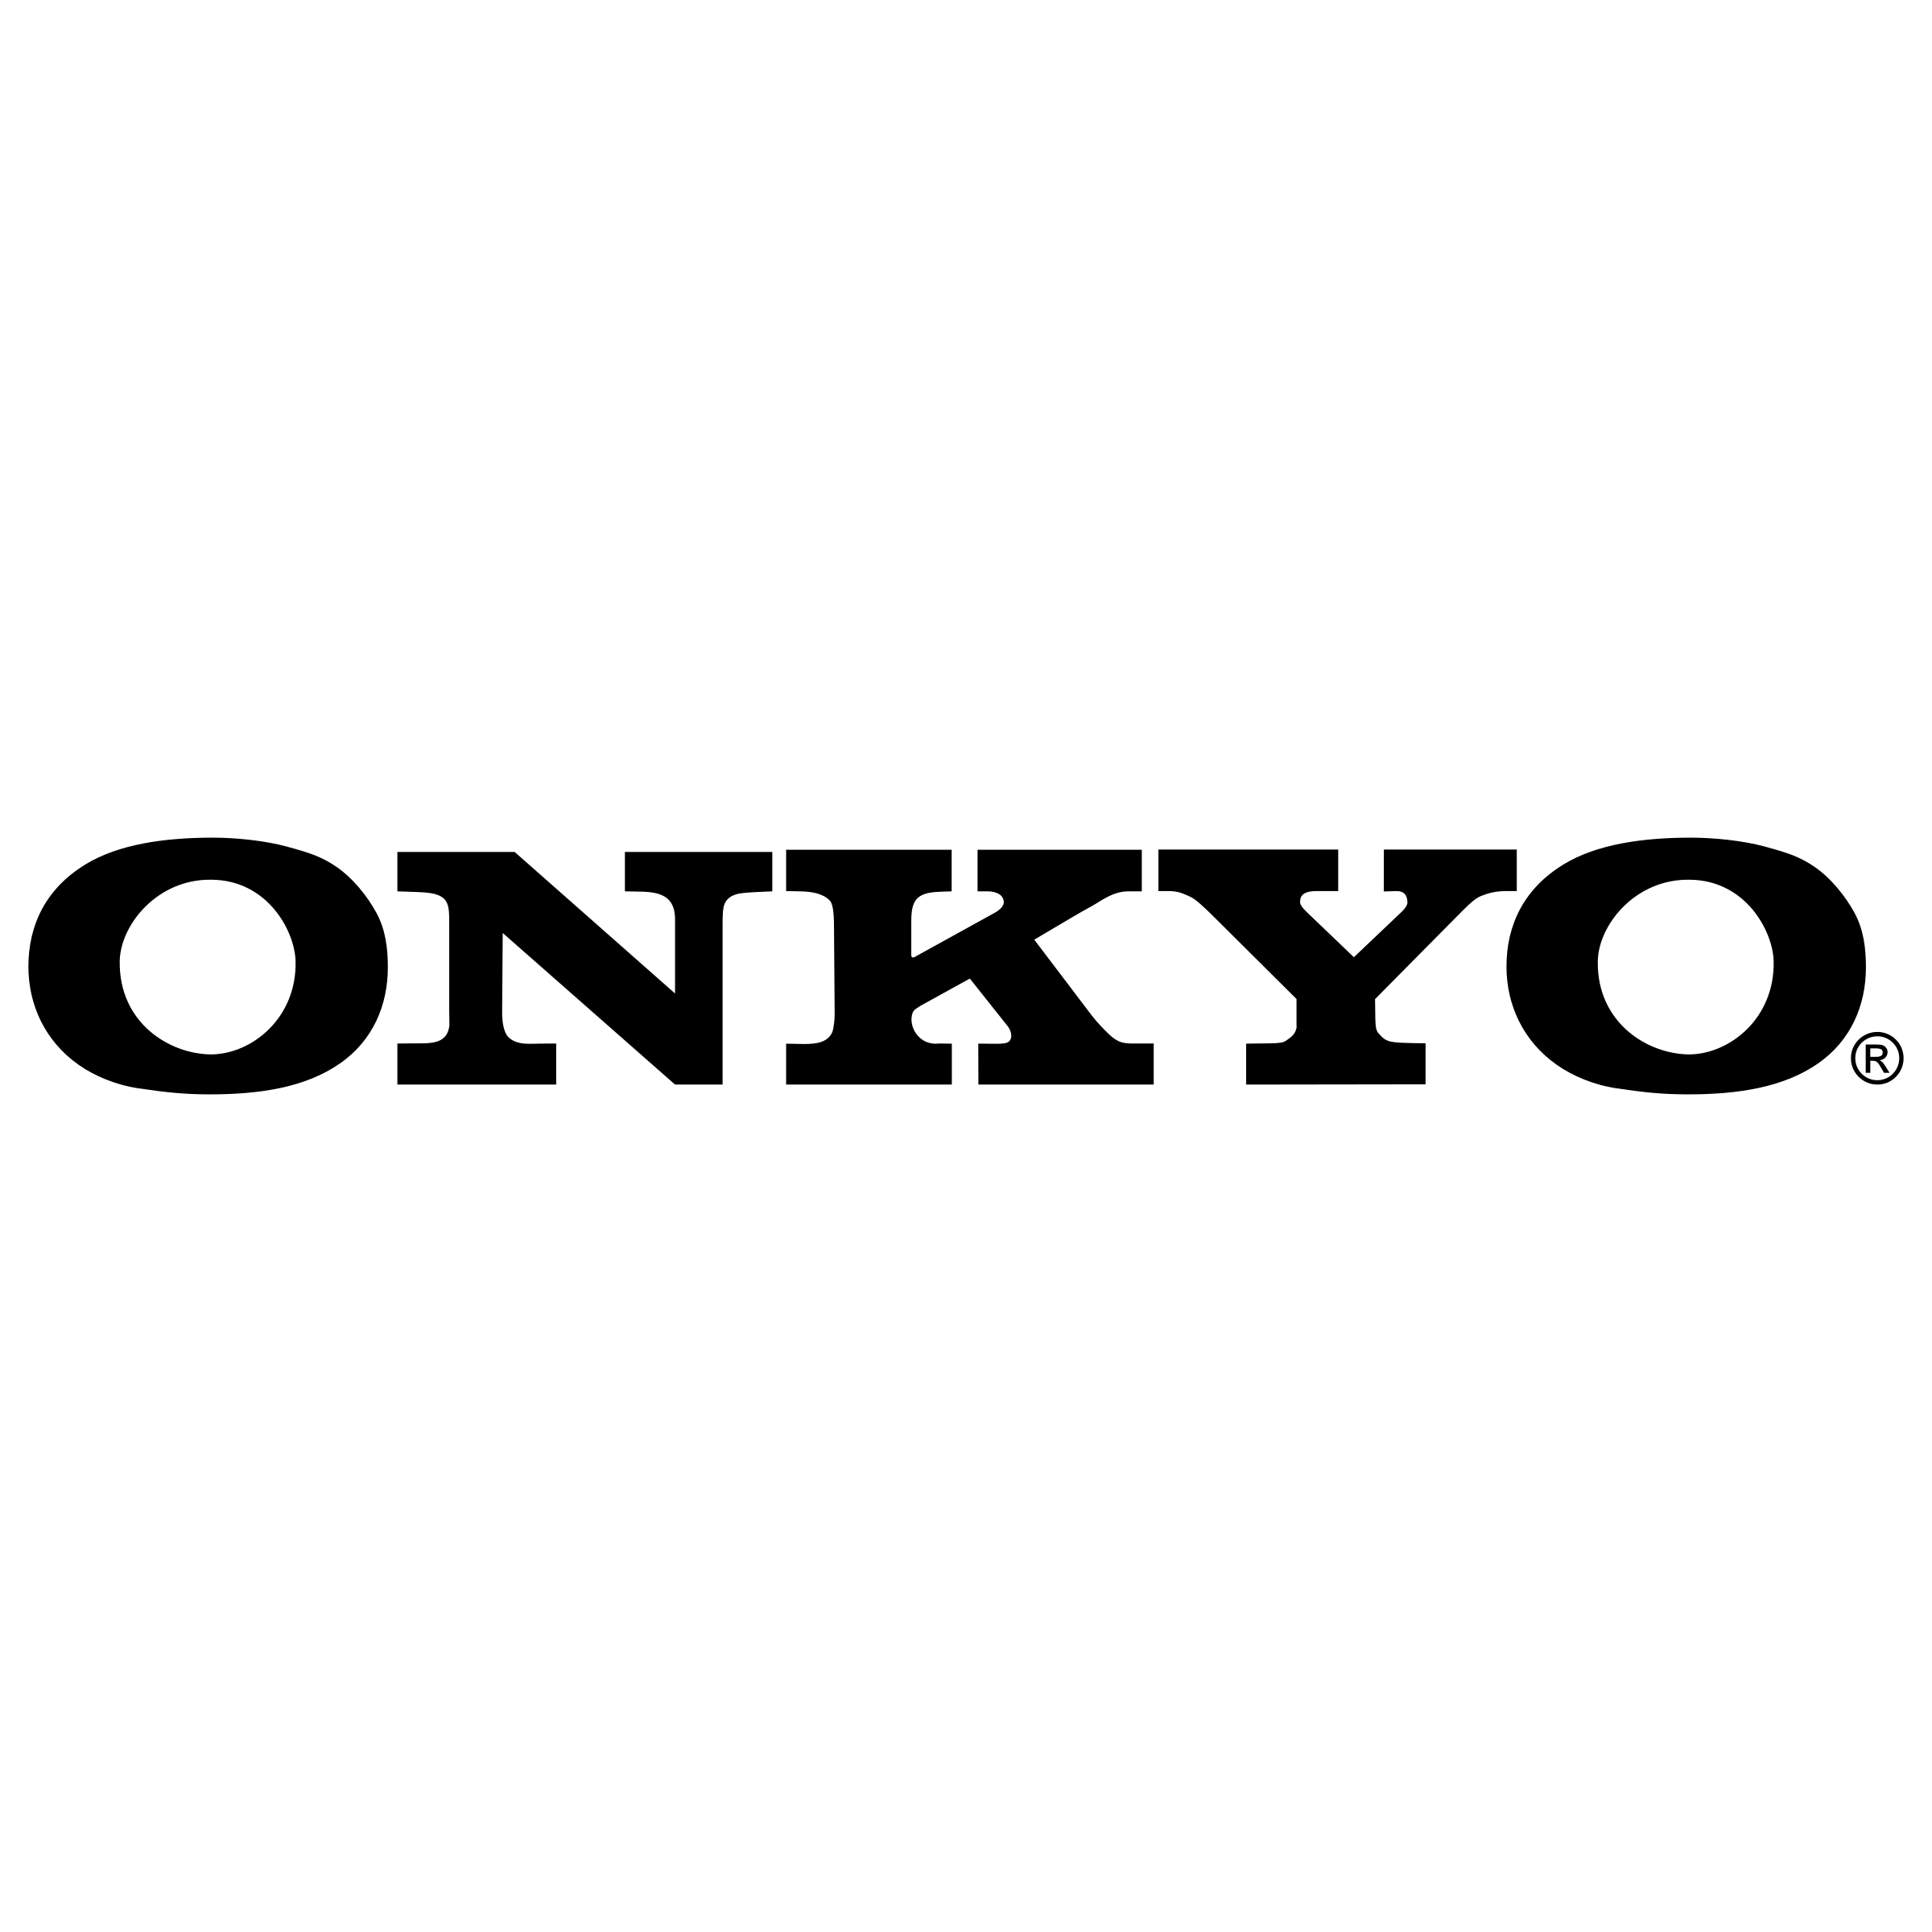 Onkyo Logo - Onkyo Logo PNG Transparent & SVG Vector - Freebie Supply